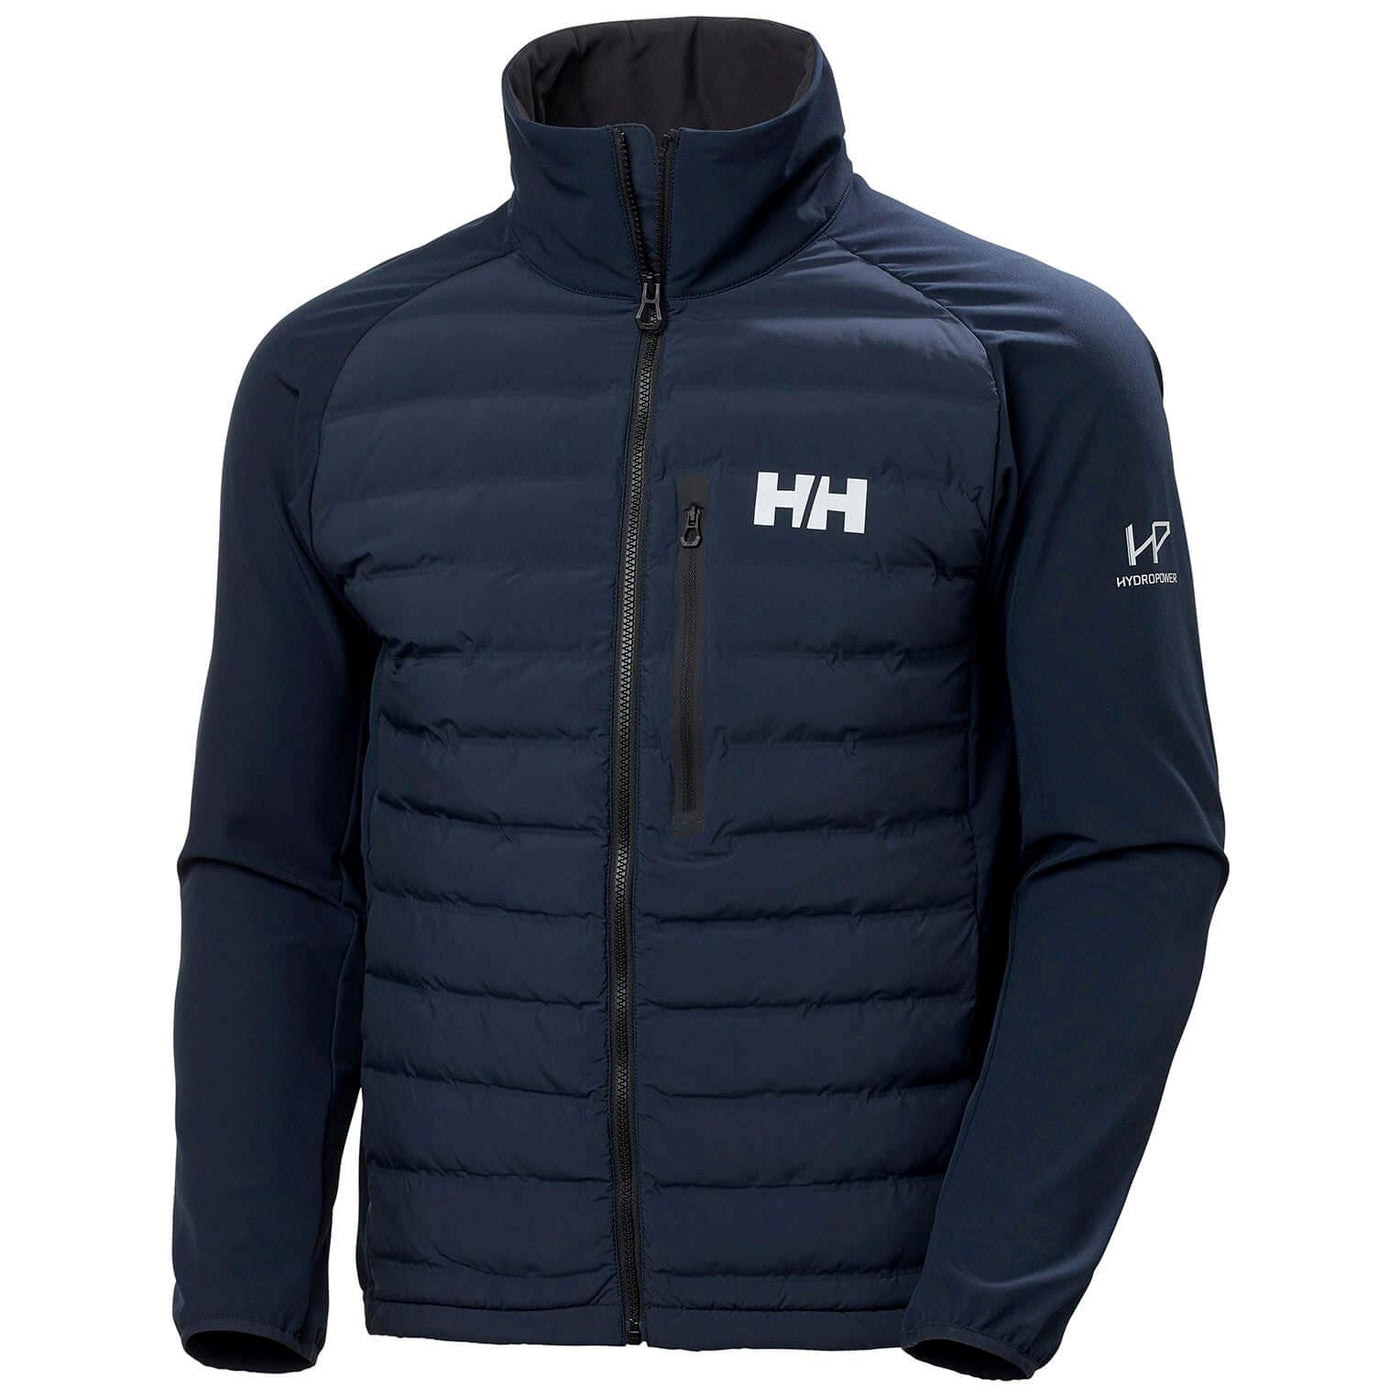 Hansen HP Insulator Jacket Navy | 900,00 DKK Lemvig Indkøbsforening